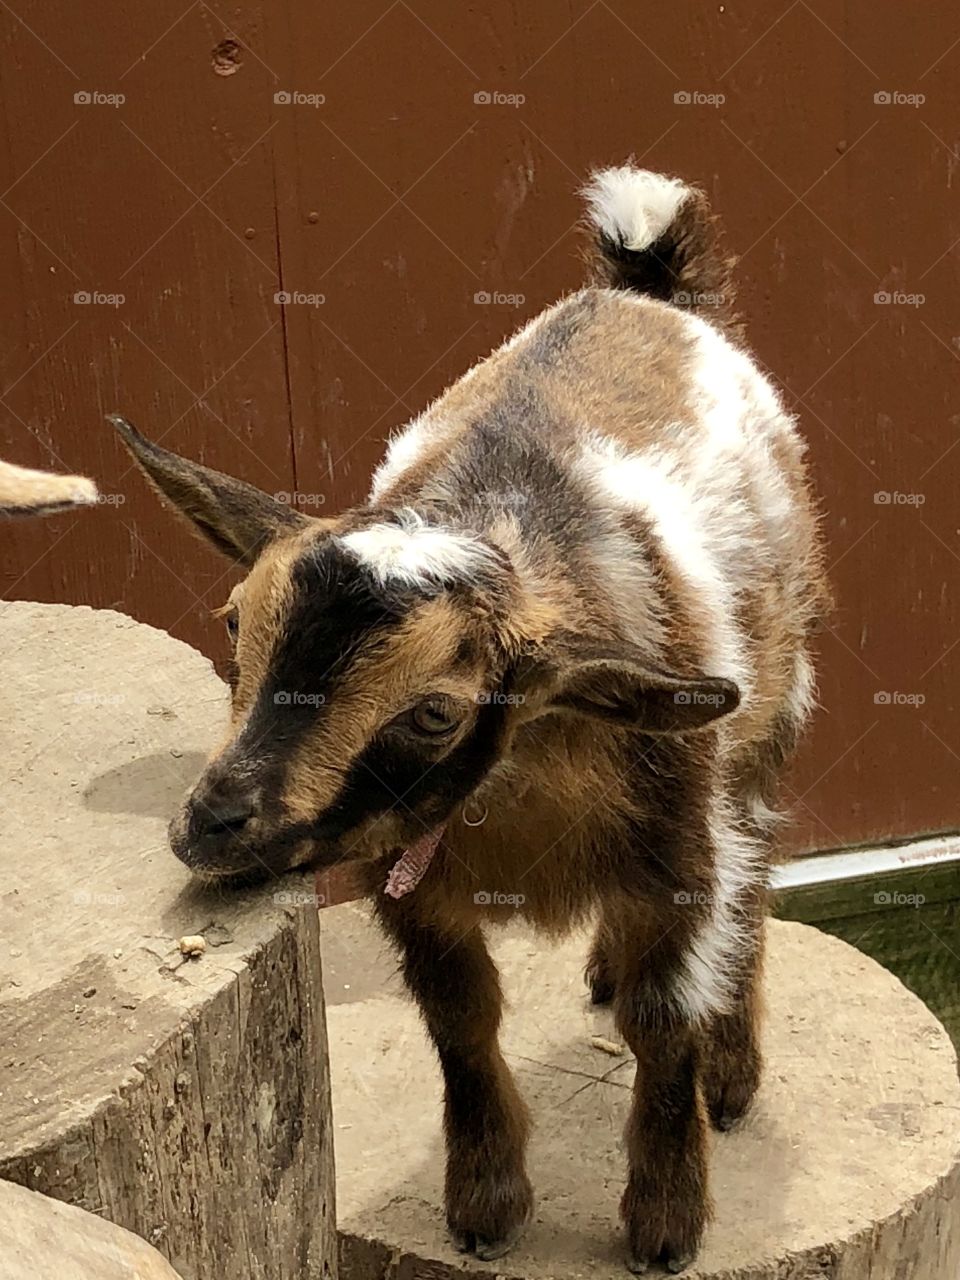 Adorable baby goat standing on wood block, looking towards camera. Honey Sweetie Acres, Goshen, OH.